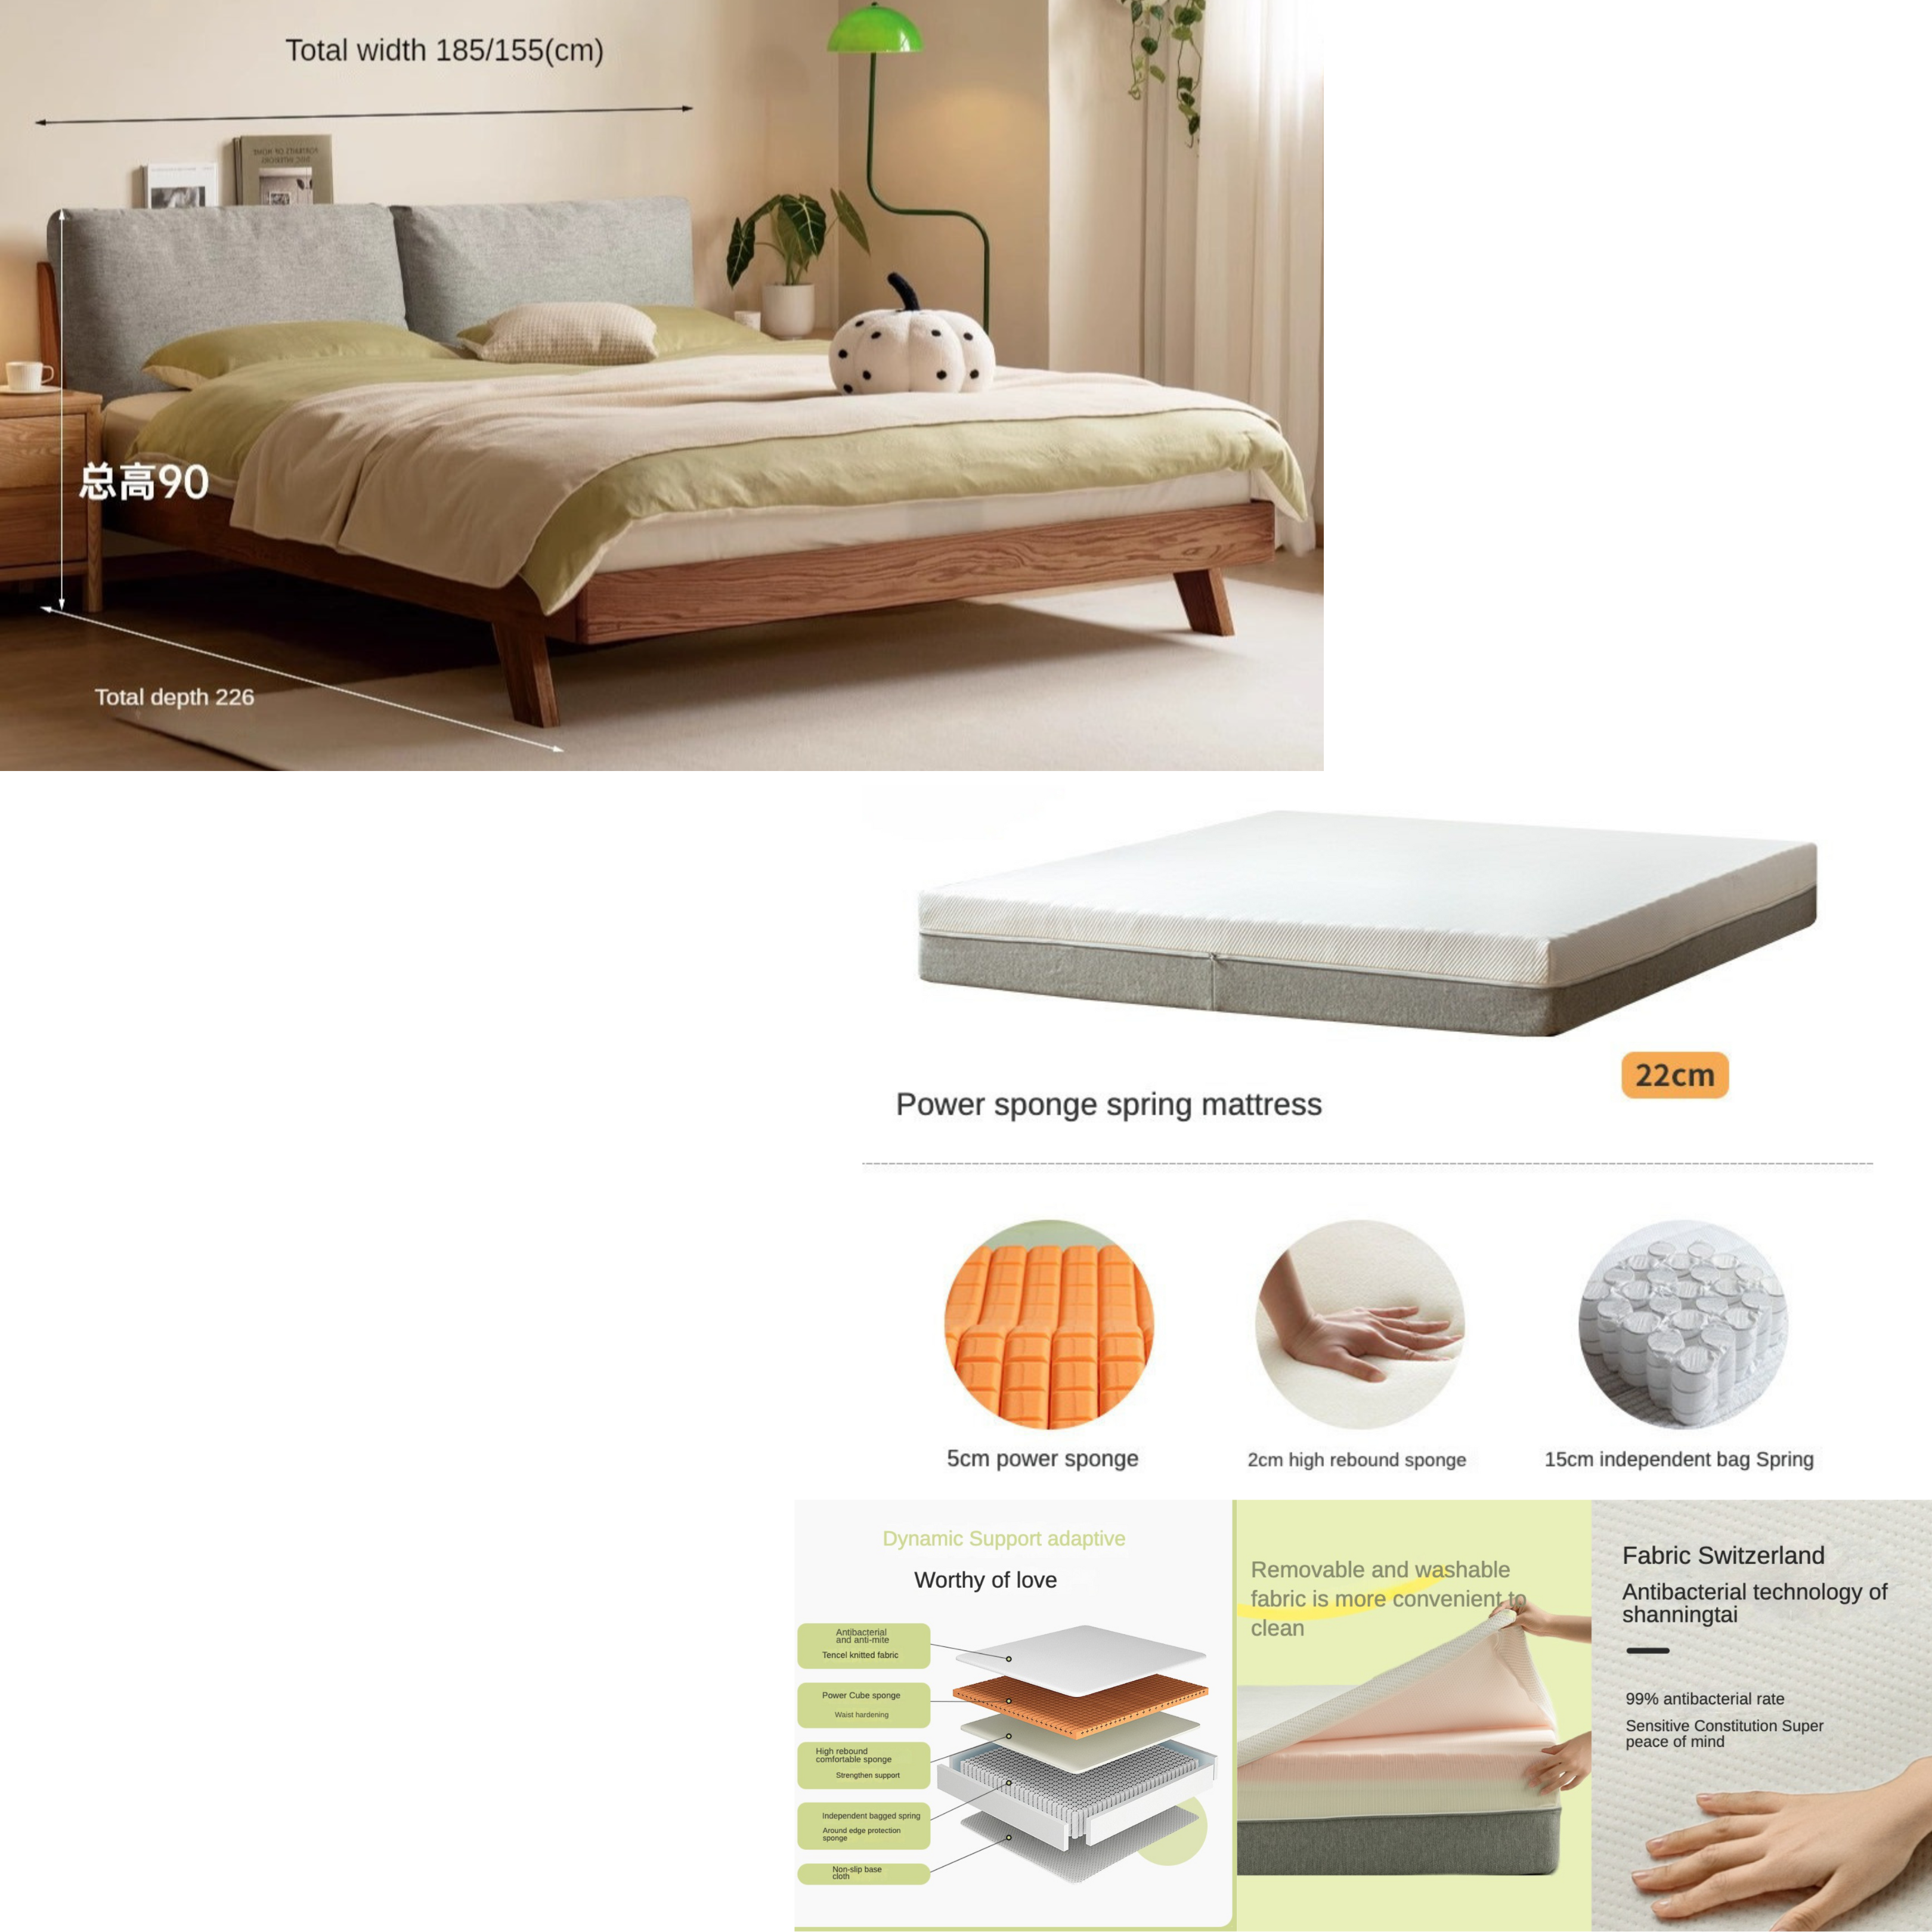 Oak solid wood soft bed"_)